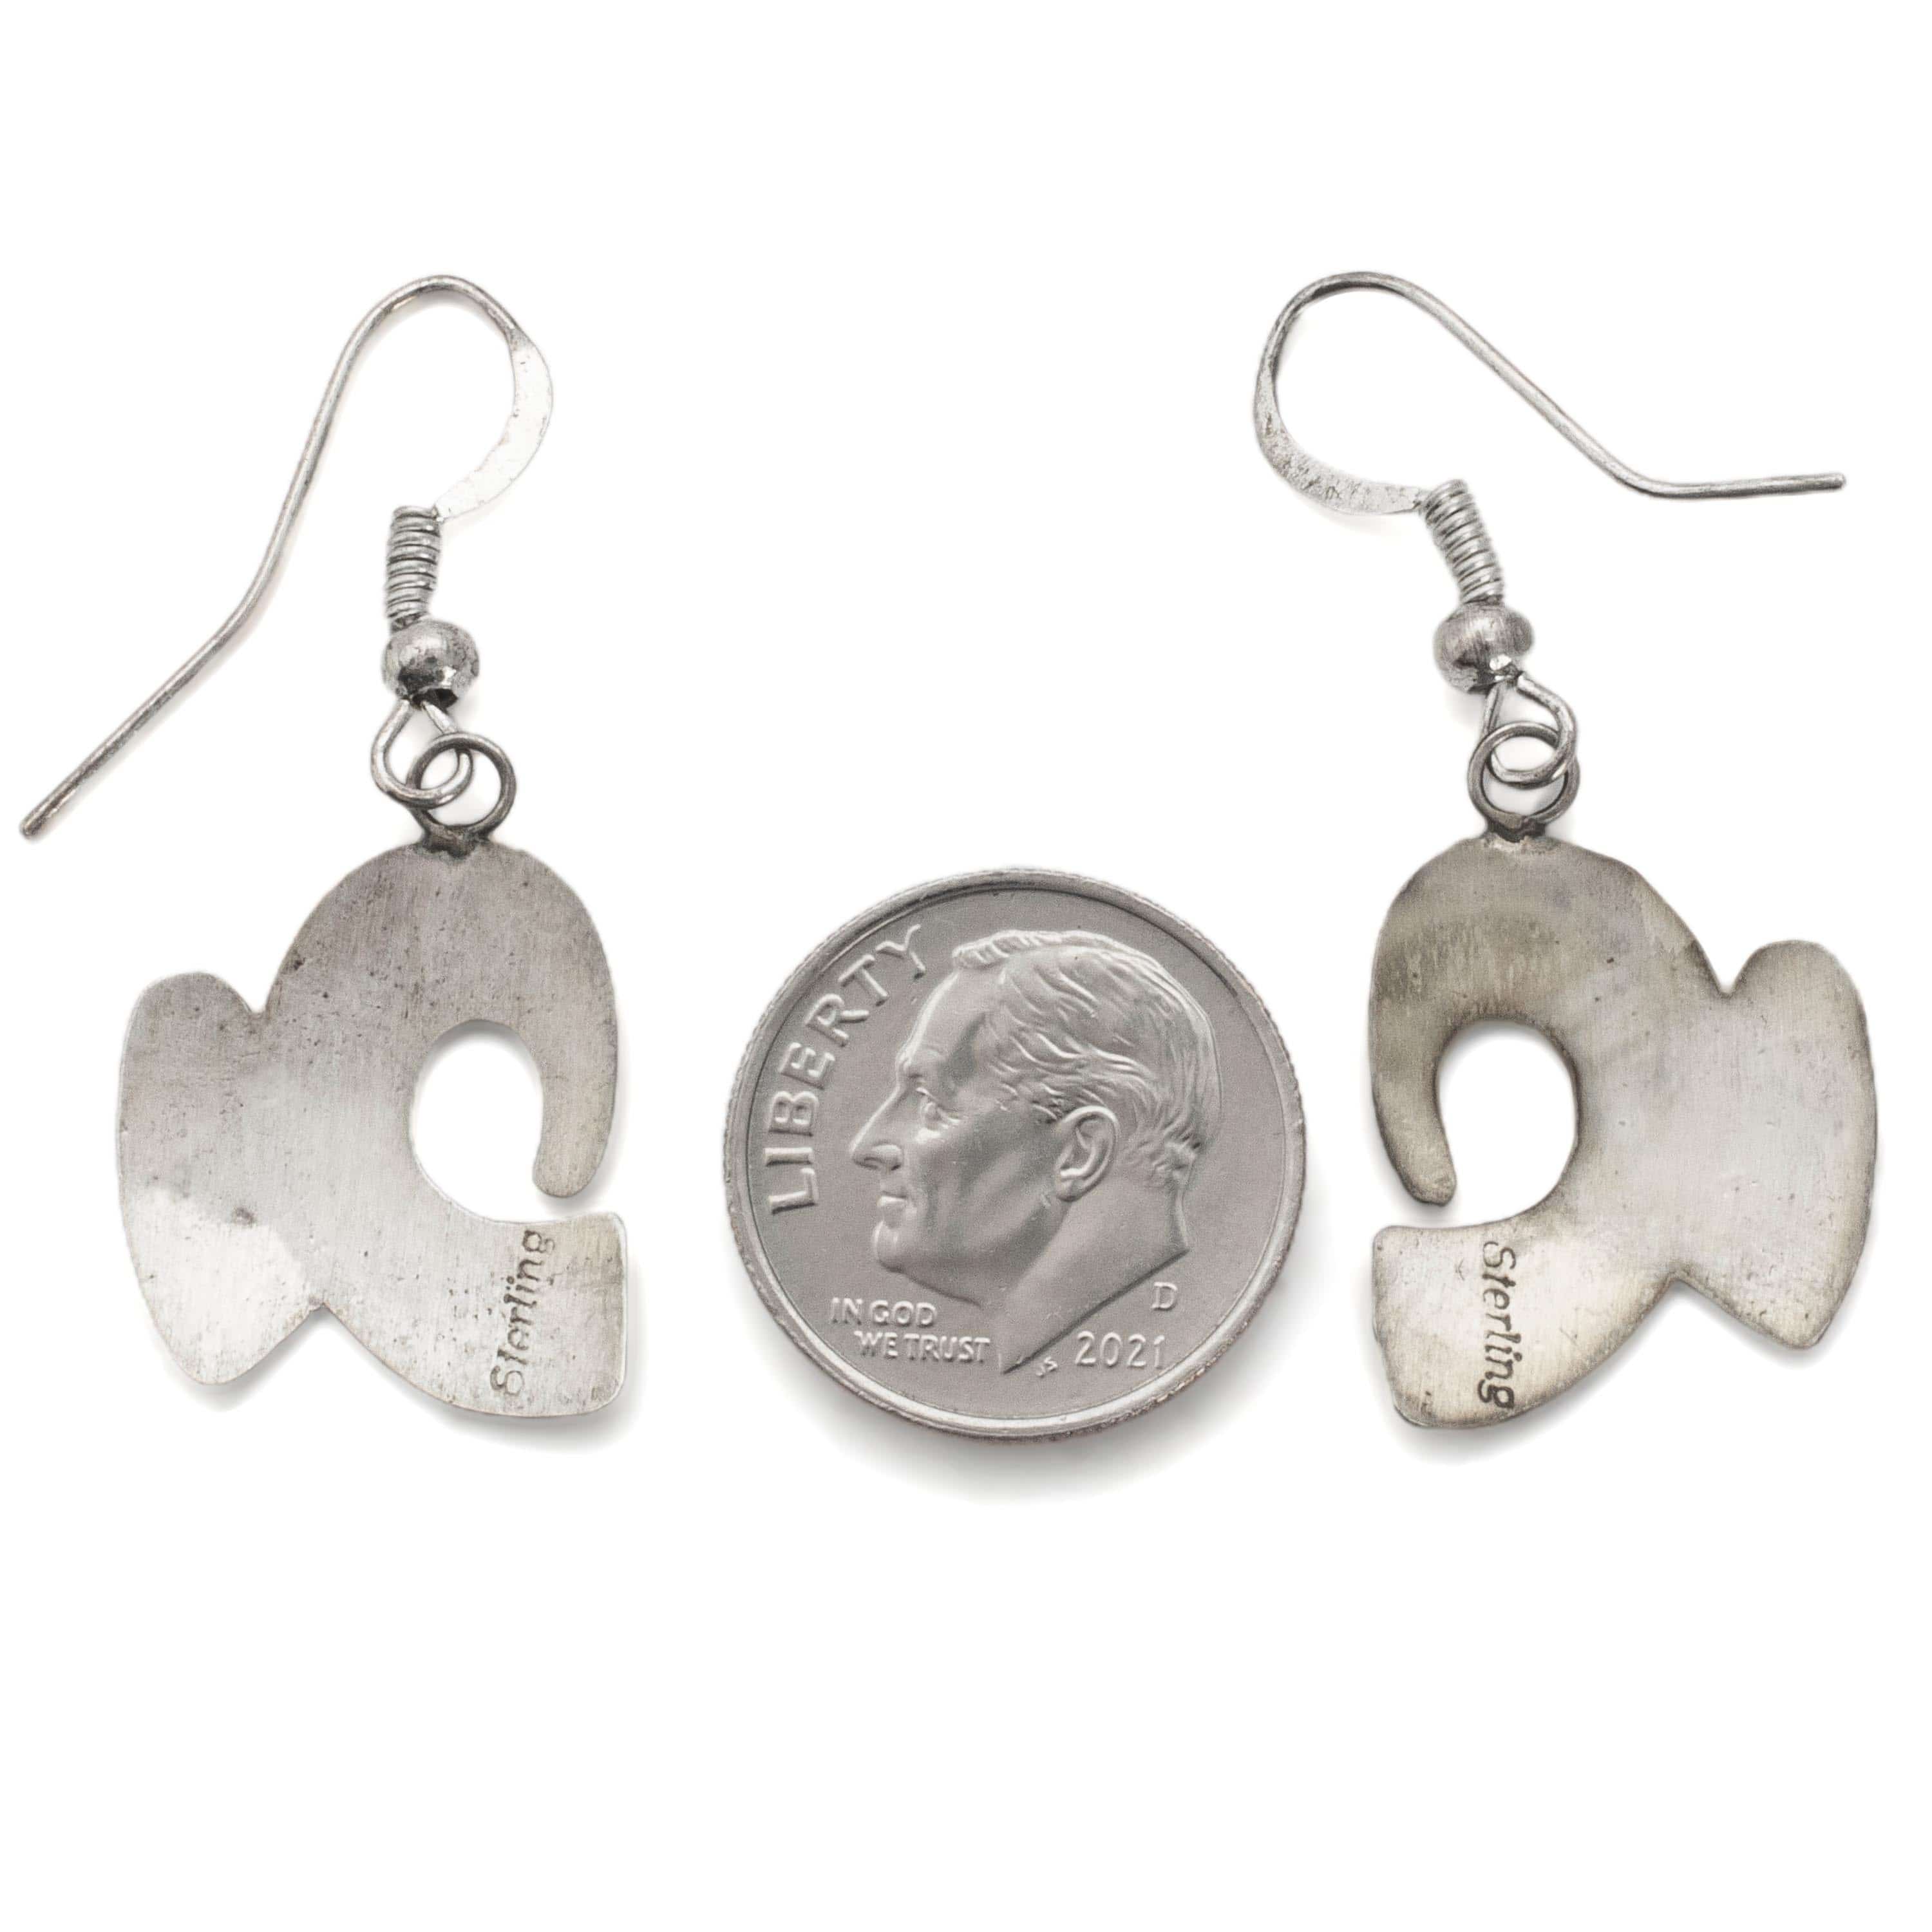 Kalifano Native American Jewelry Navajo Thunderbird USA Native American Made Sterling Silver Earrings NAE150.007